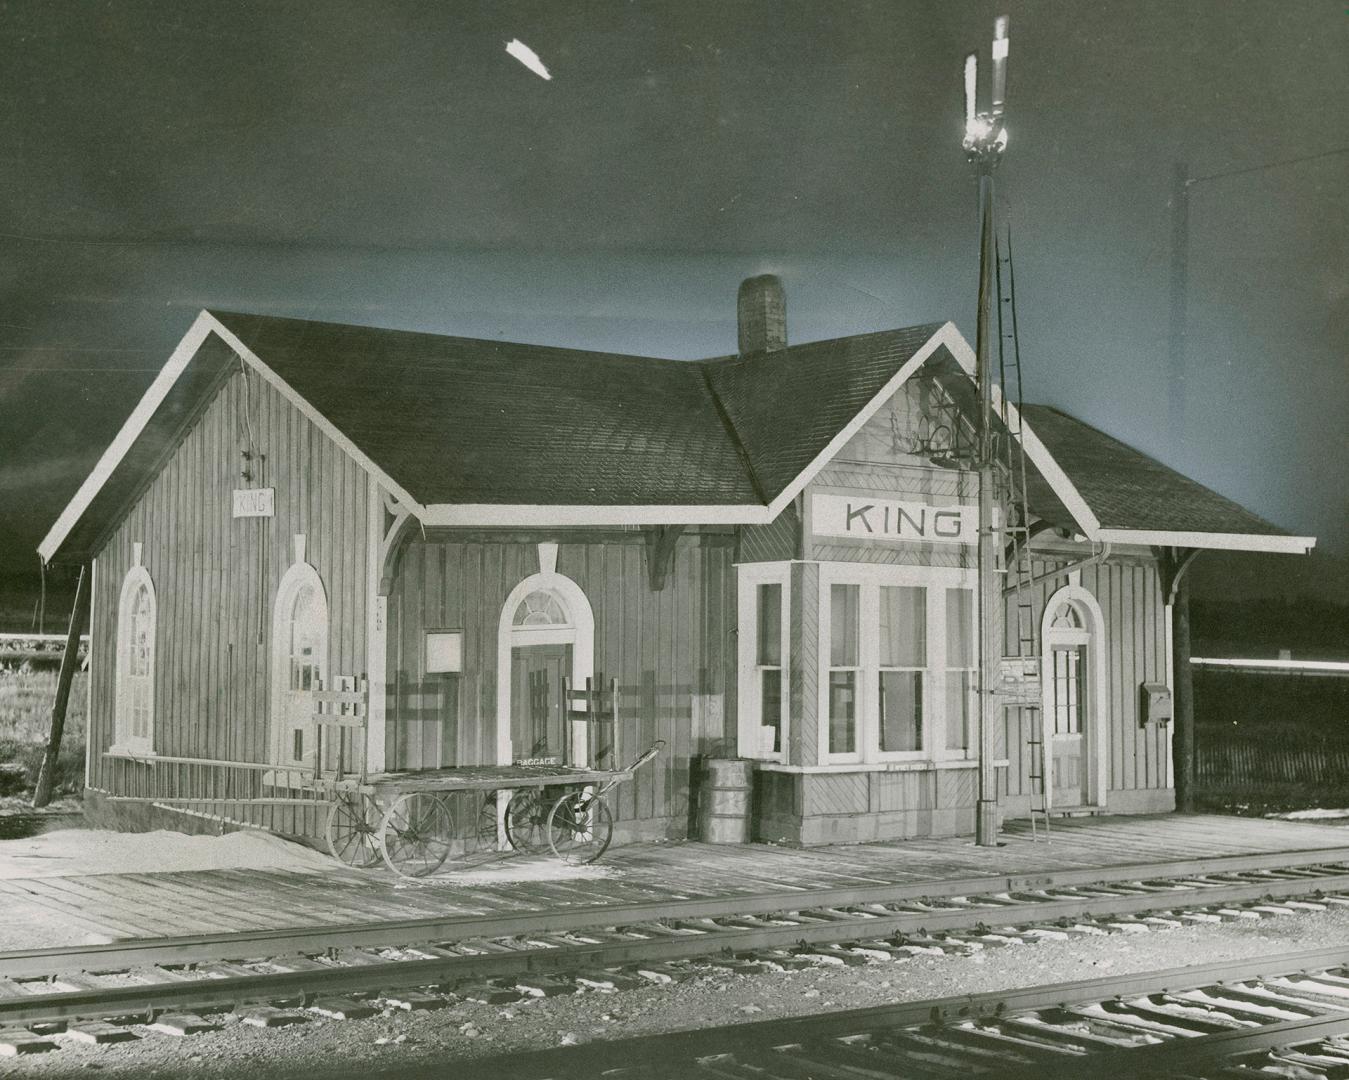 Ontario's oldest existing railway station